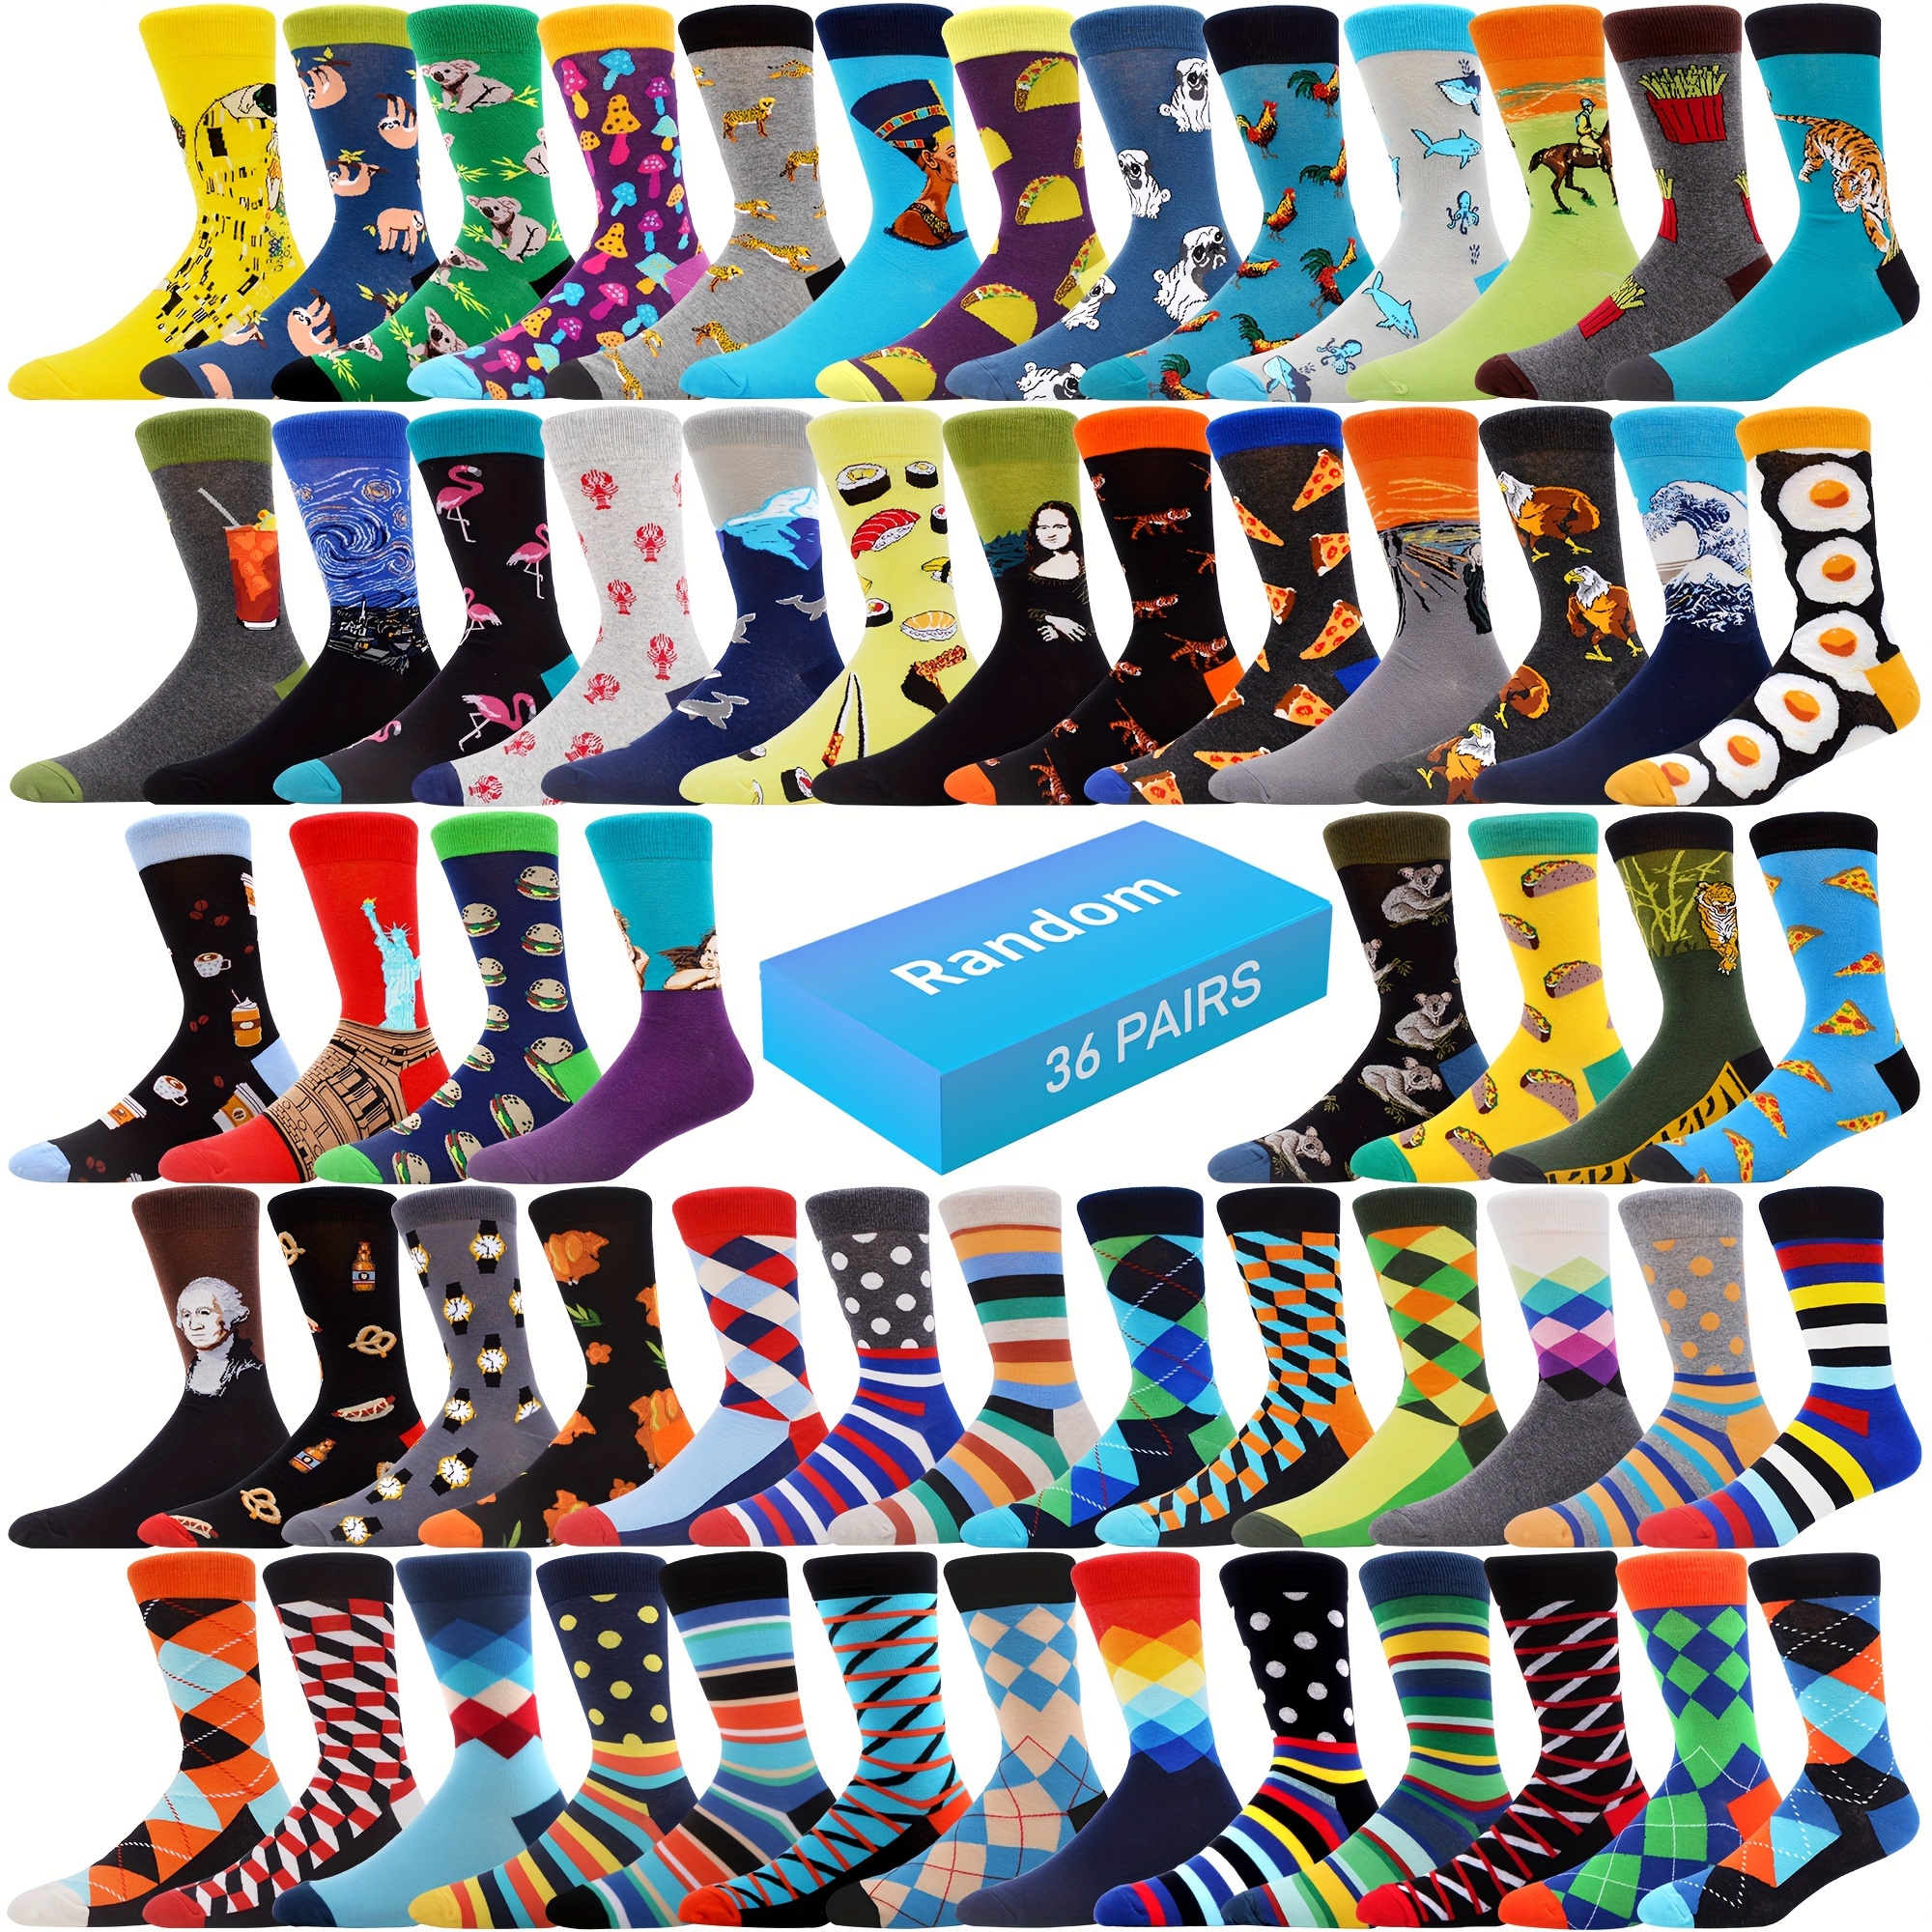 

36 Pairs Men's Socks Funny Colorful Cotton Crew Socks Random Pattern (us Sizes 7.5-12)